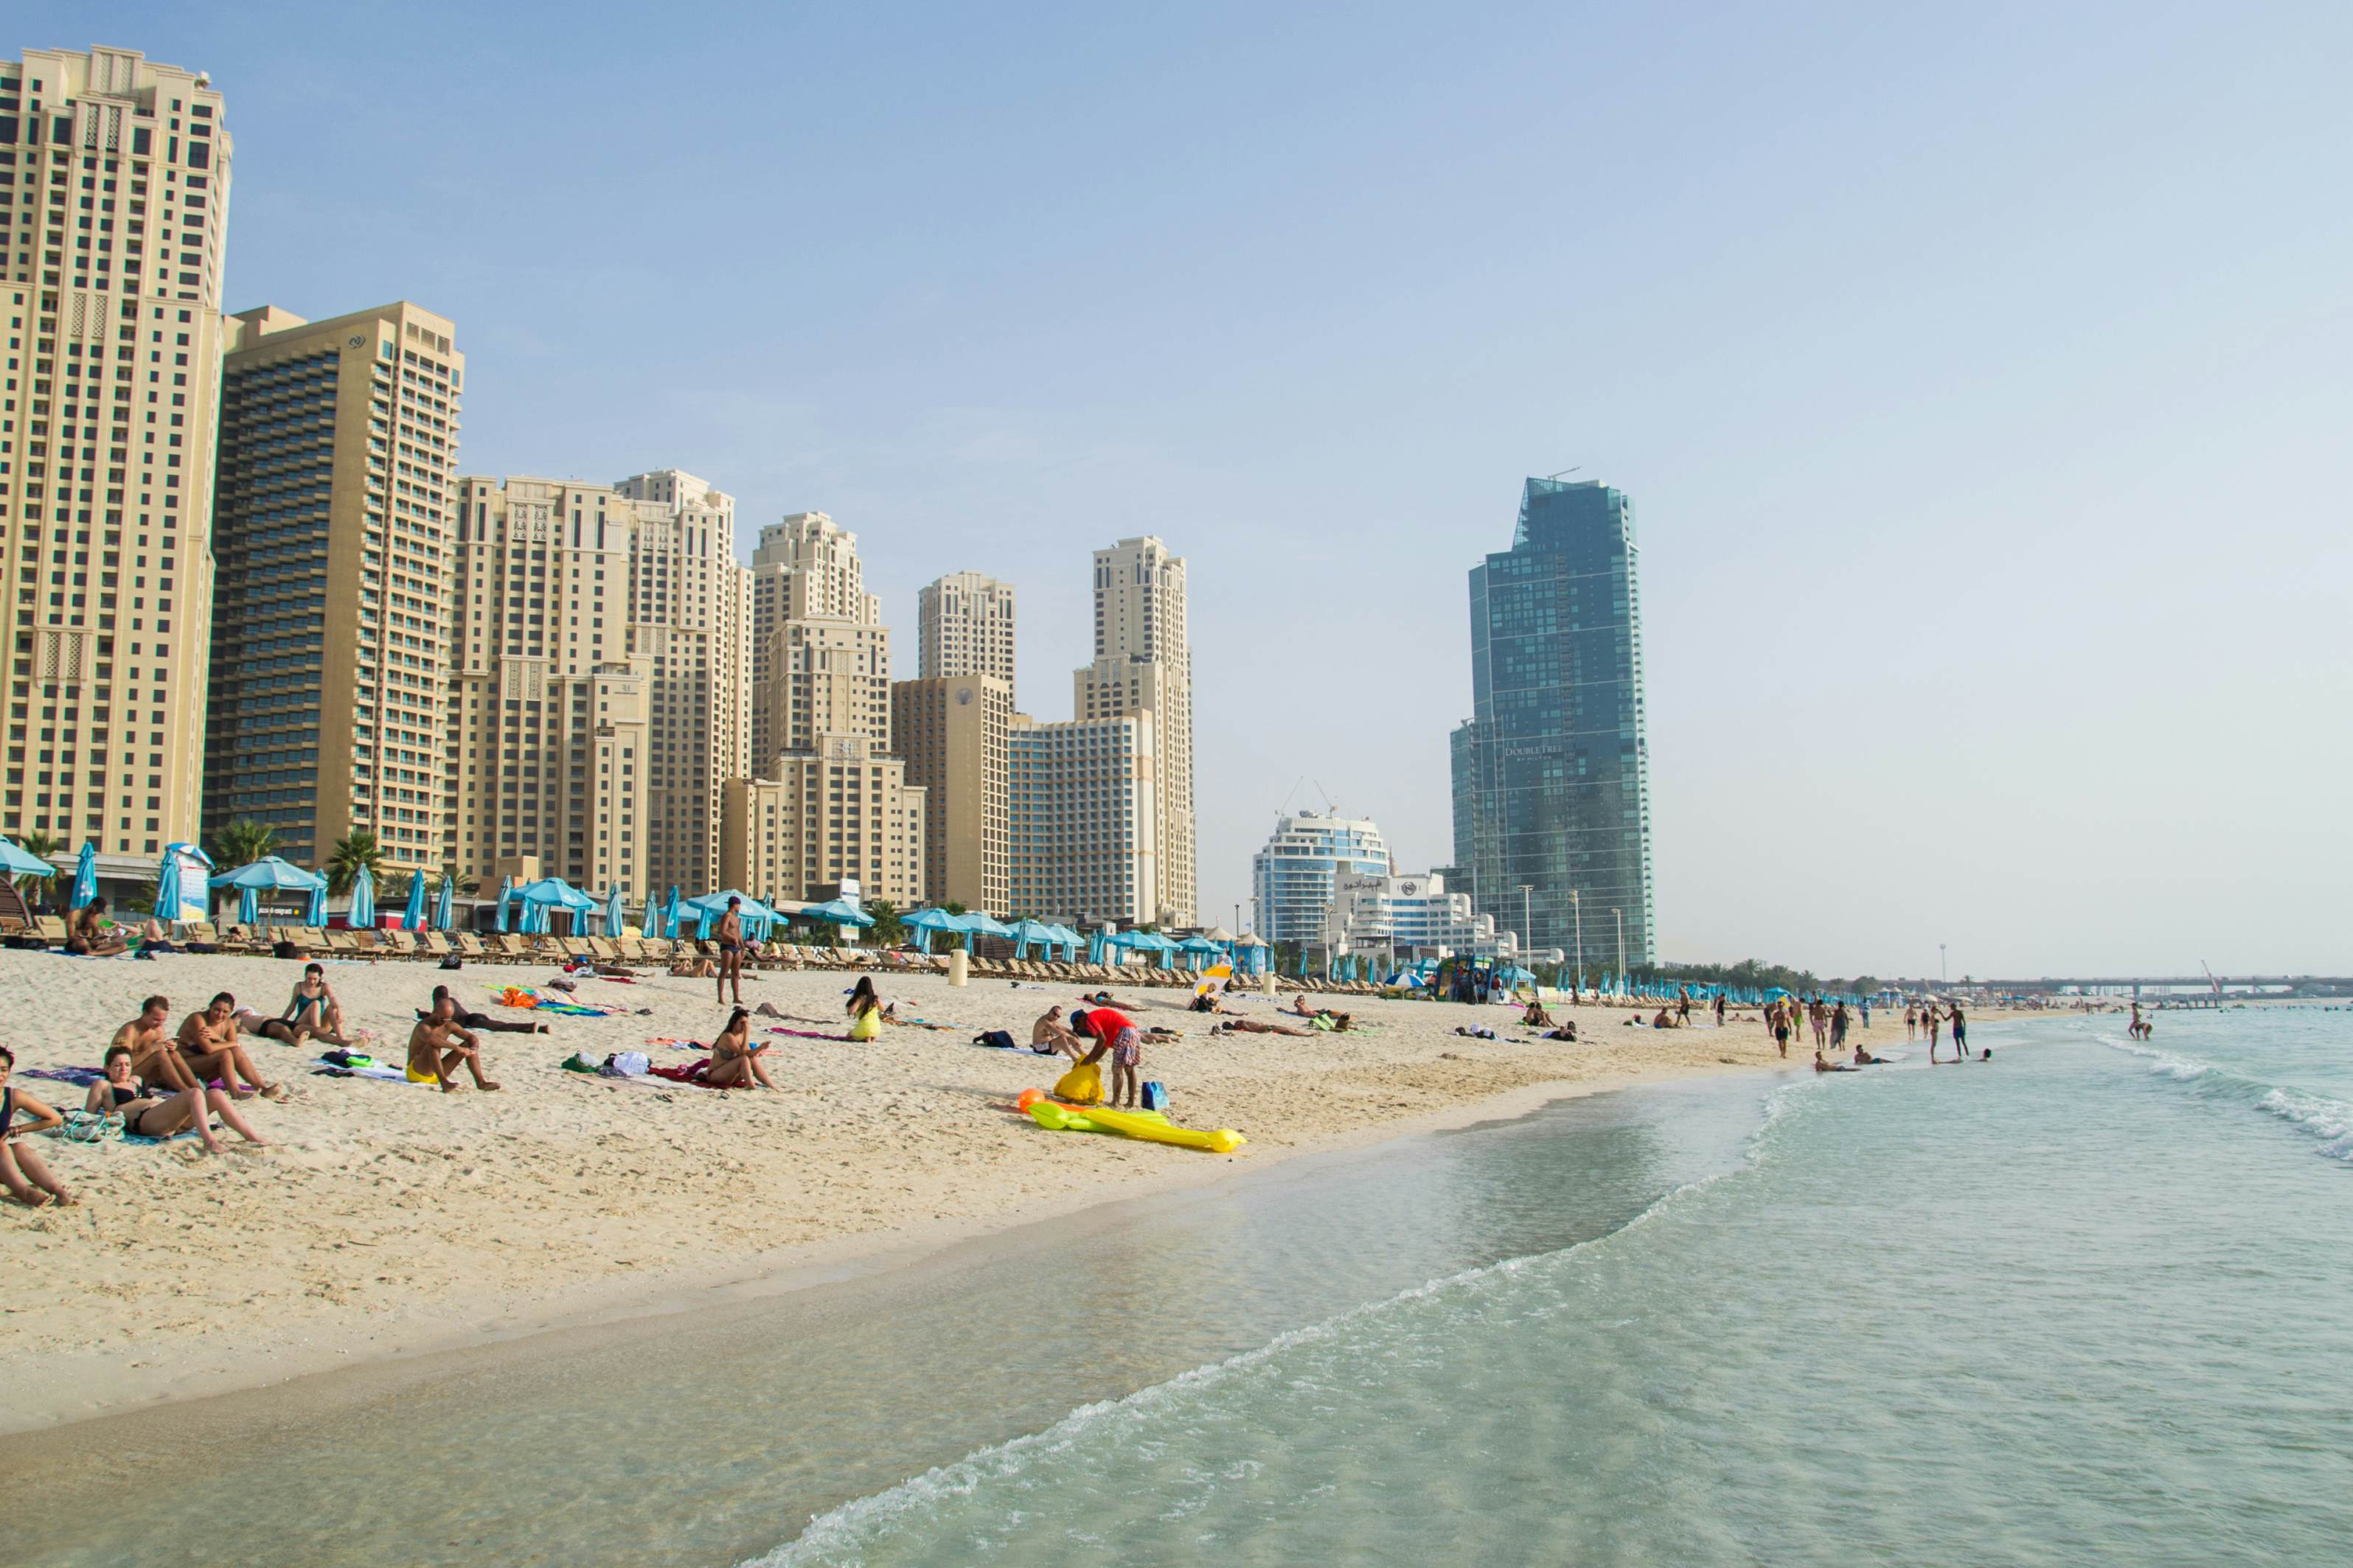 JBR Beach | Dubai, United Arab Emirates | Sights - Lonely Planet